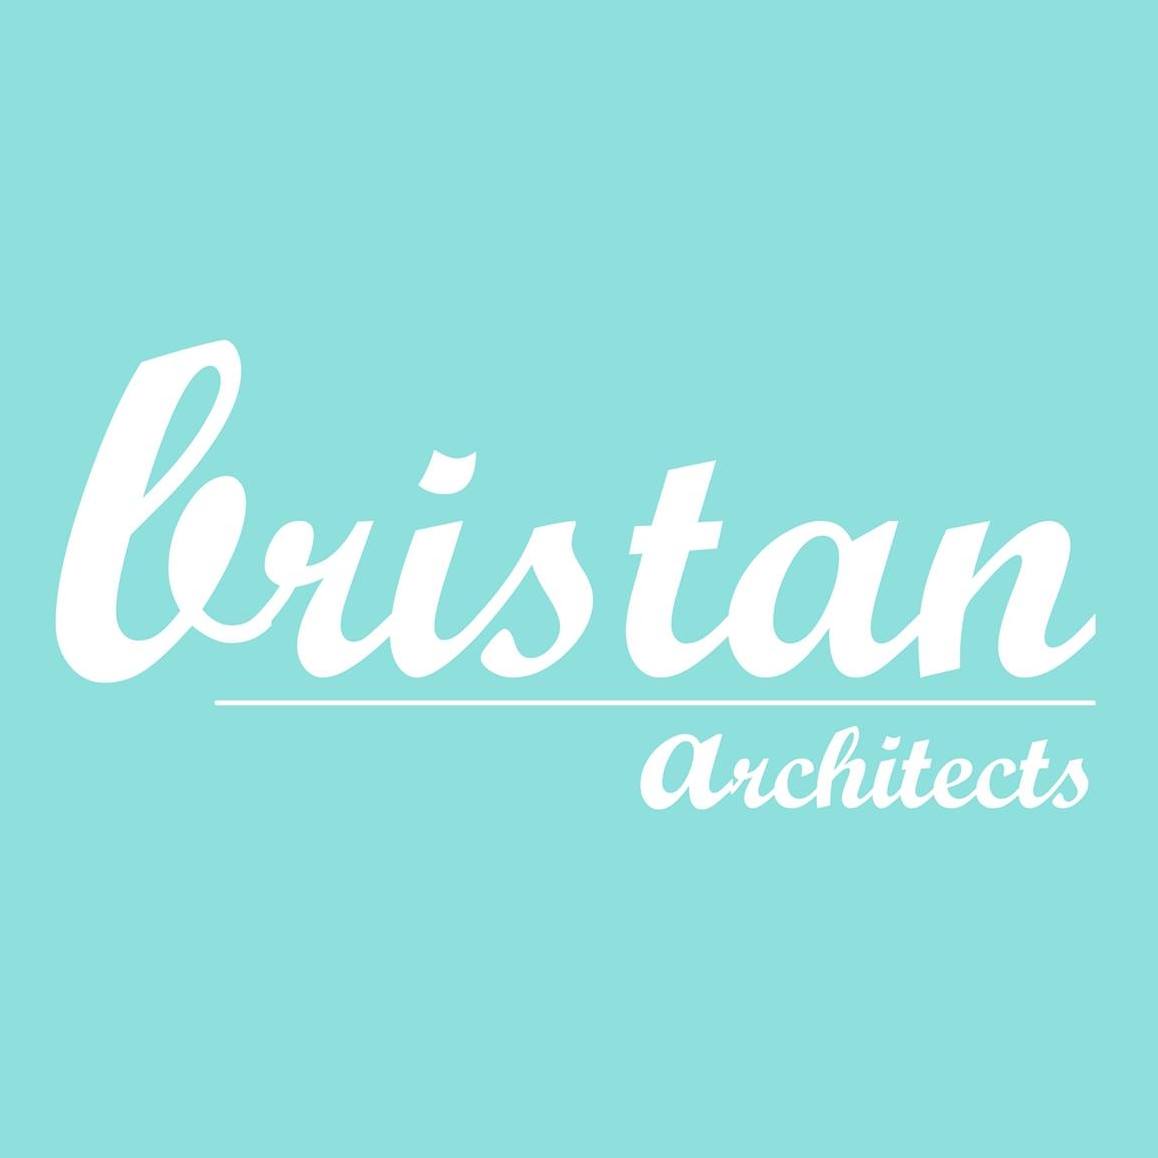 Bristan Architects|IT Services|Professional Services